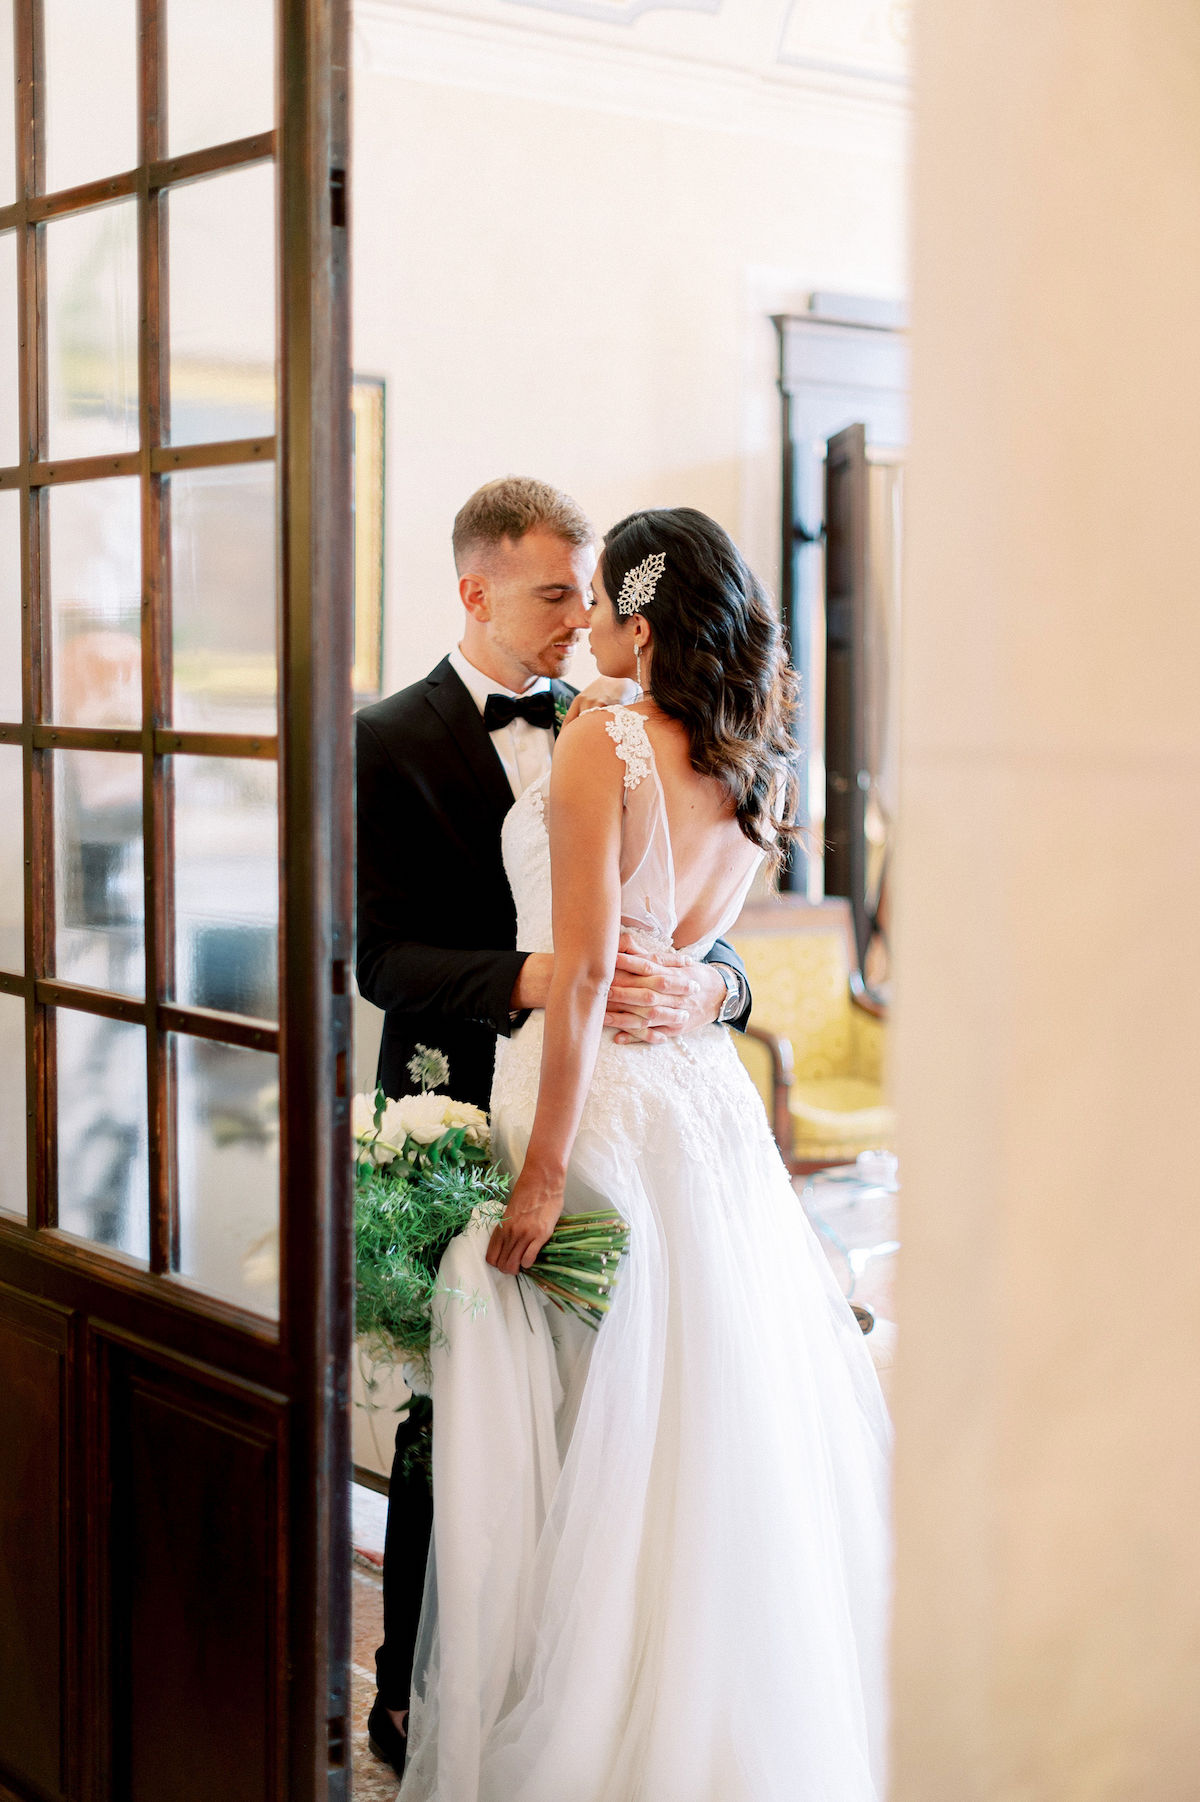 Bride and groom photo in Italy Villa - Linda Nari Photography